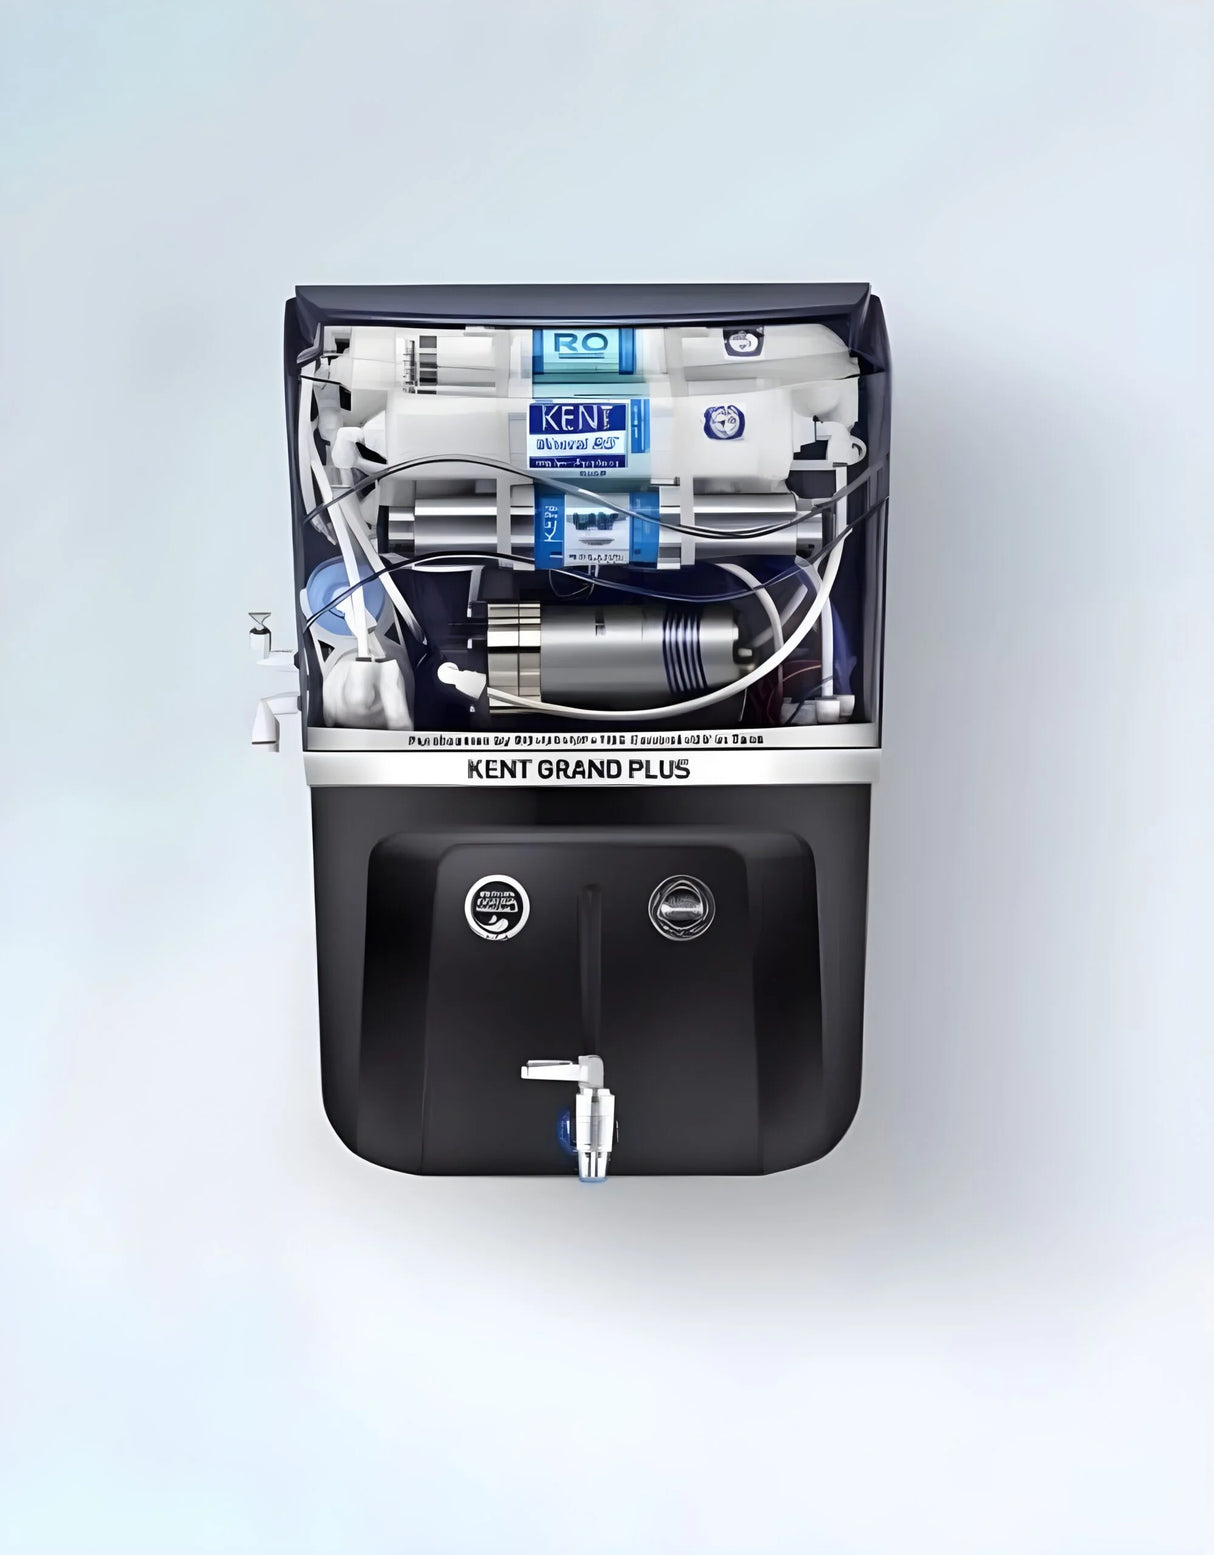 KENT Grand Plus-Black RO Water Purifier 111099B 20 L RO + UV + UF + TDS Control + UV in Tank Water Purifier (Black)